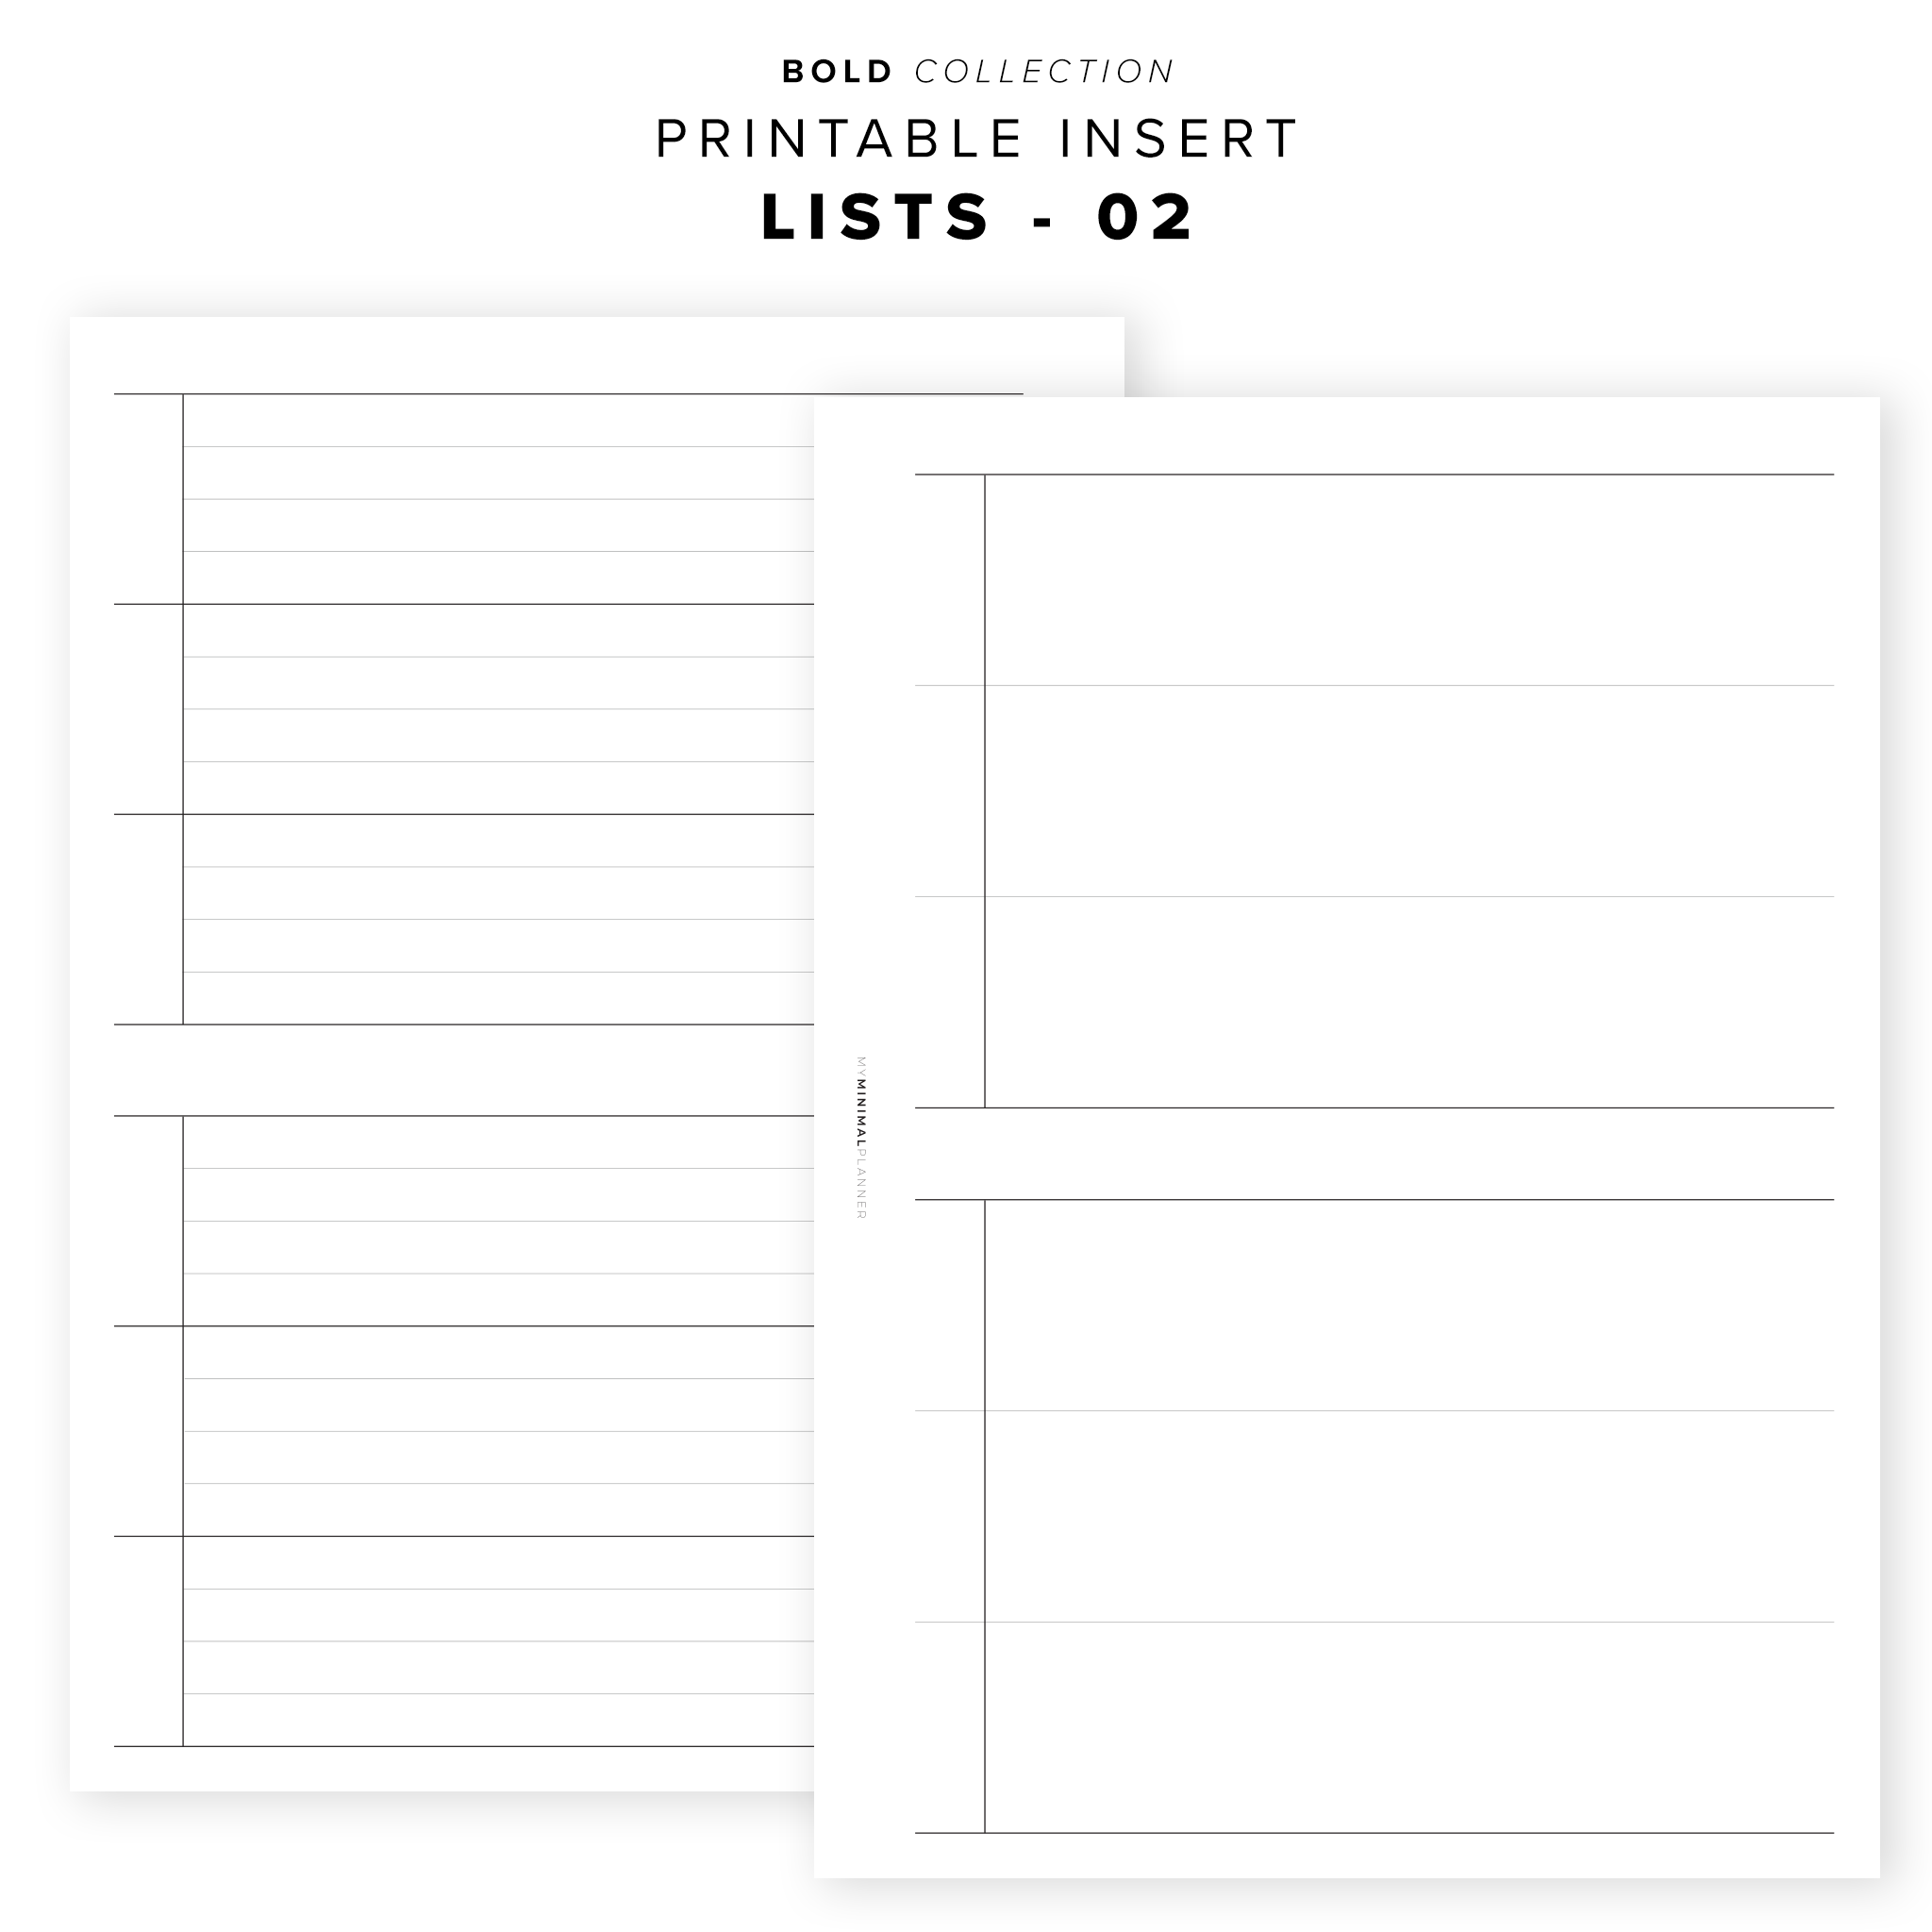 PR36 - List 02 - Printable Insert